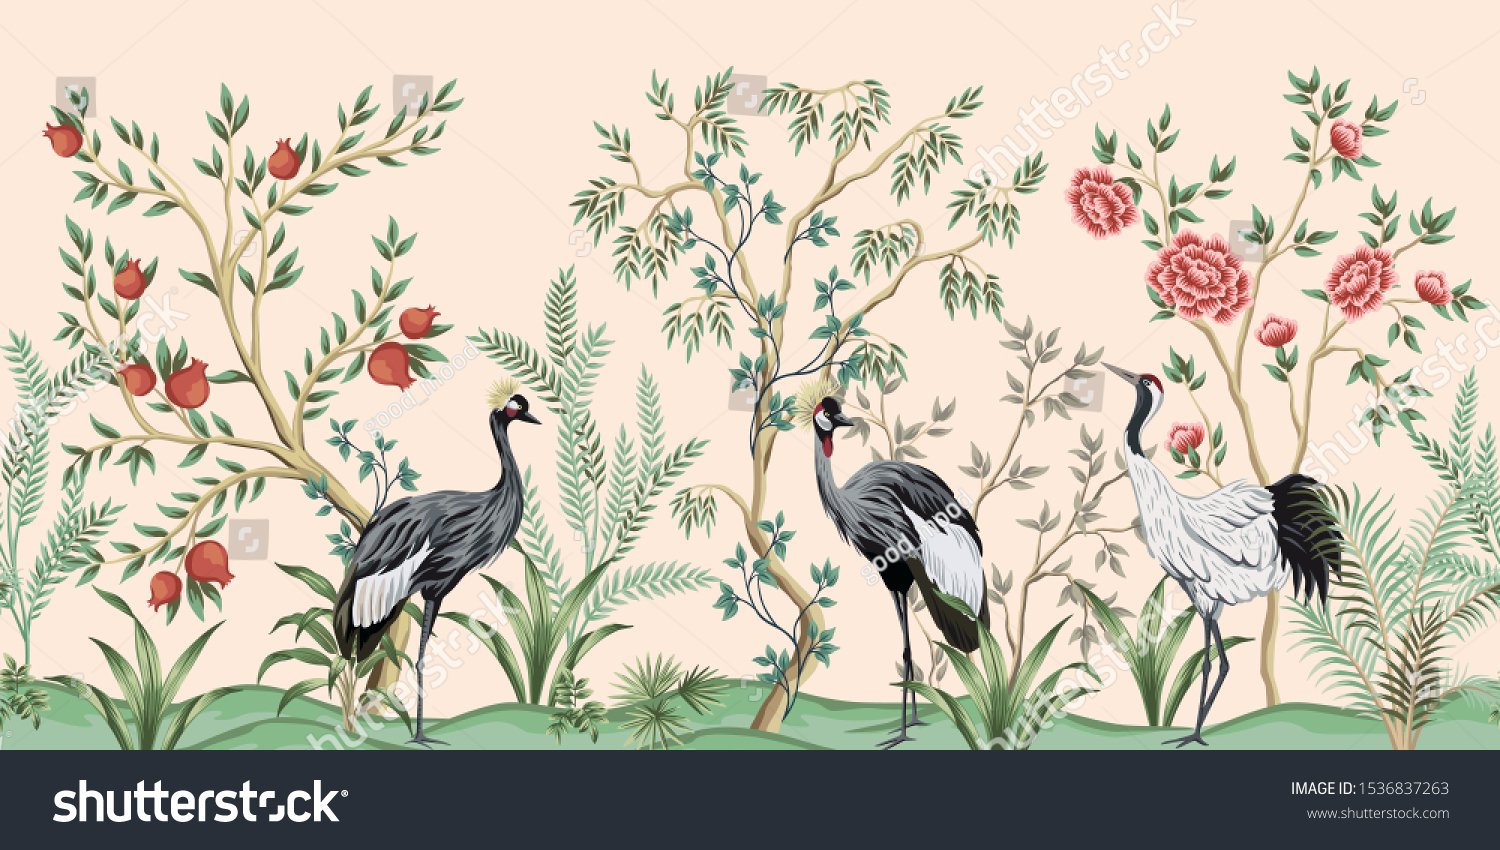 stock-vector-vintage-garden-tree-pomegranate-tree-plant-crane-bird-floral-seamless-border-pink-background-1536837263.jpg